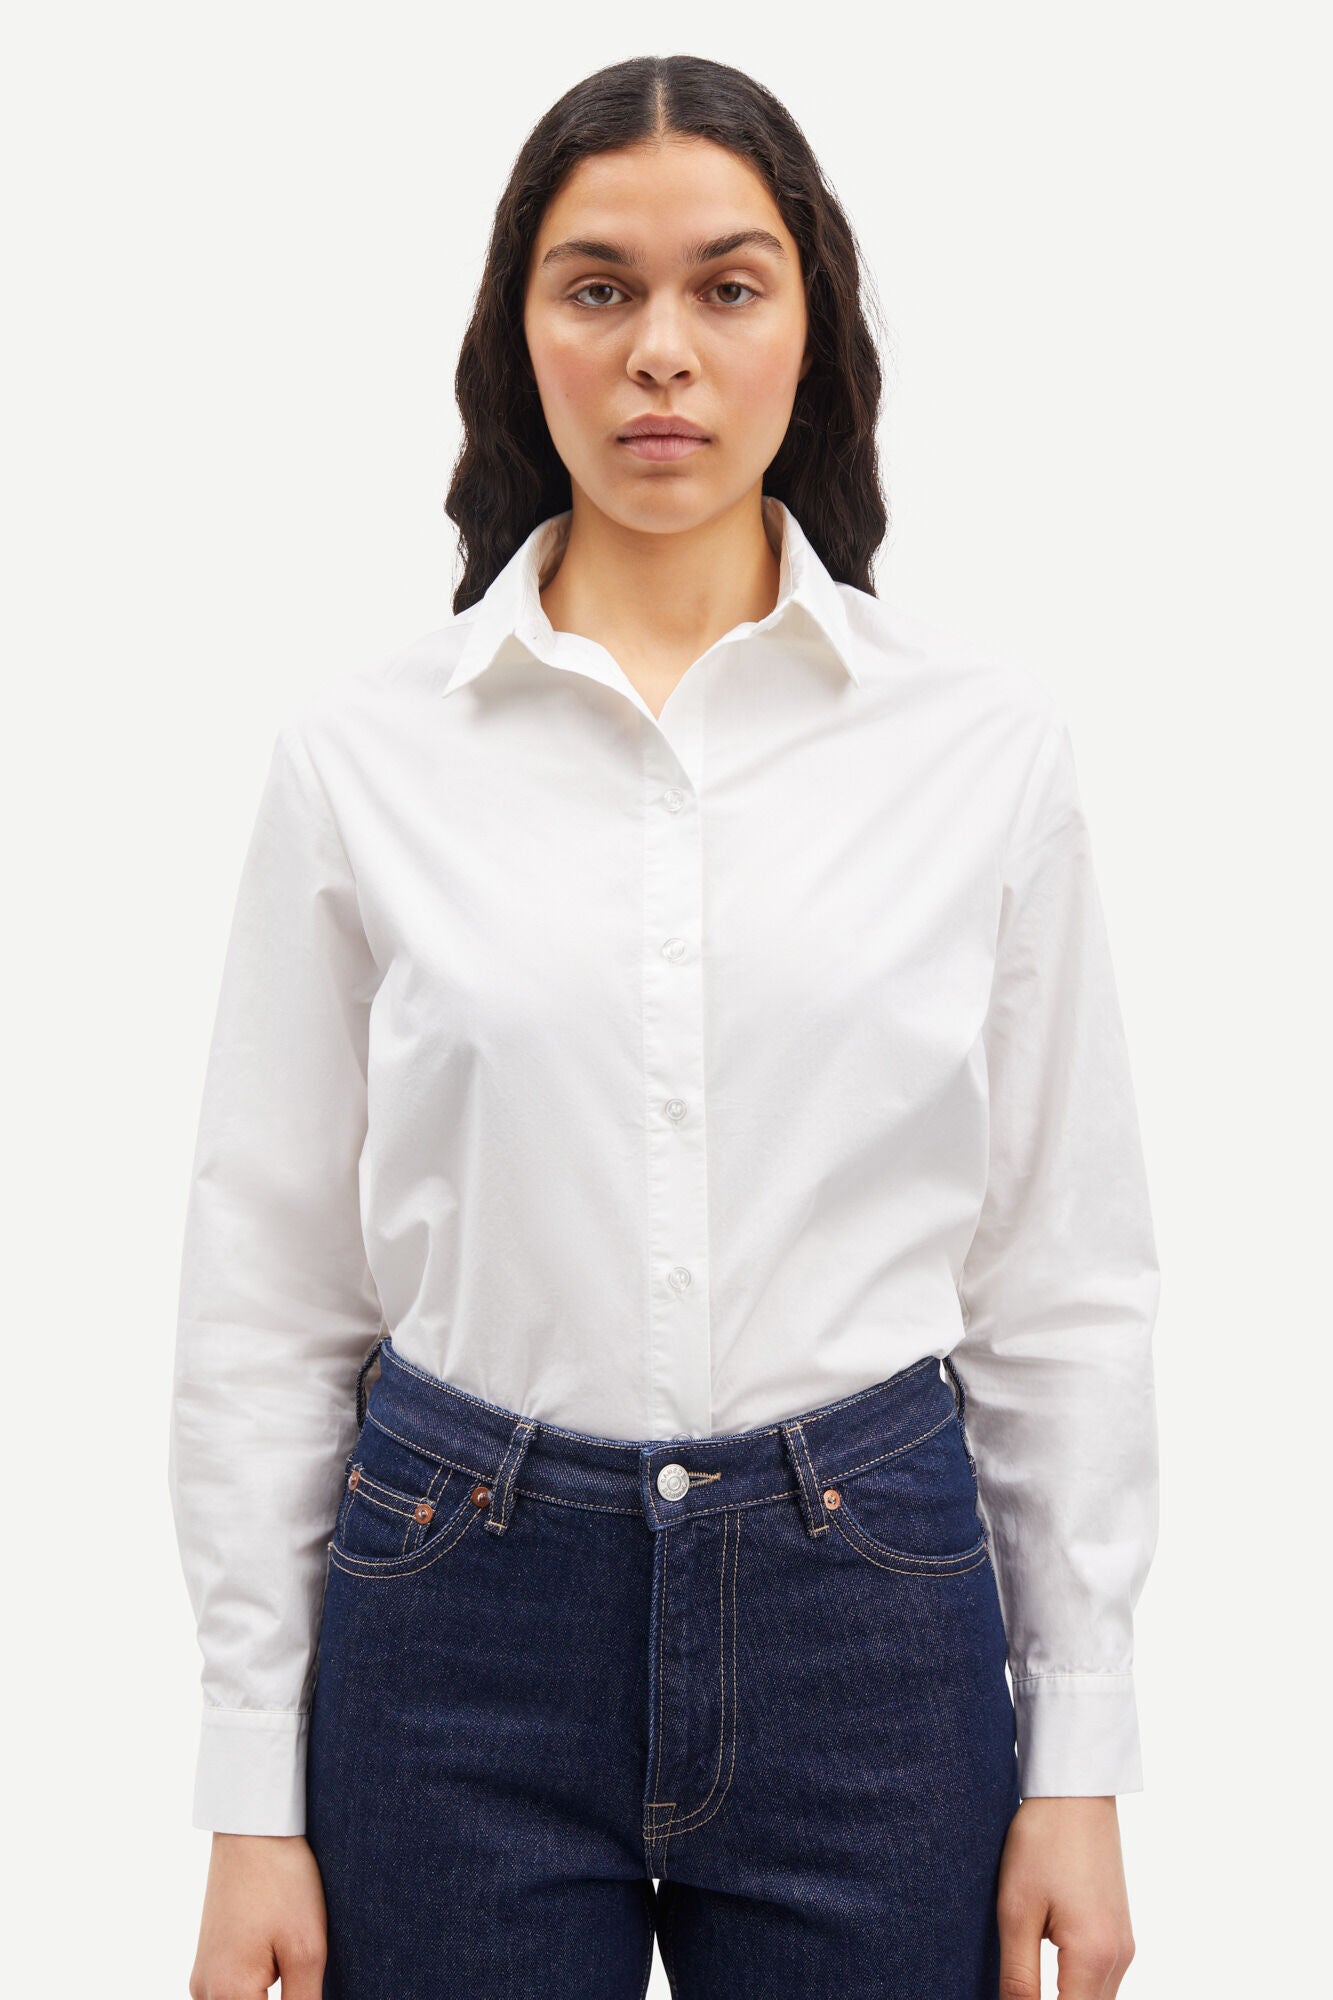 Samadisoni shirt in white